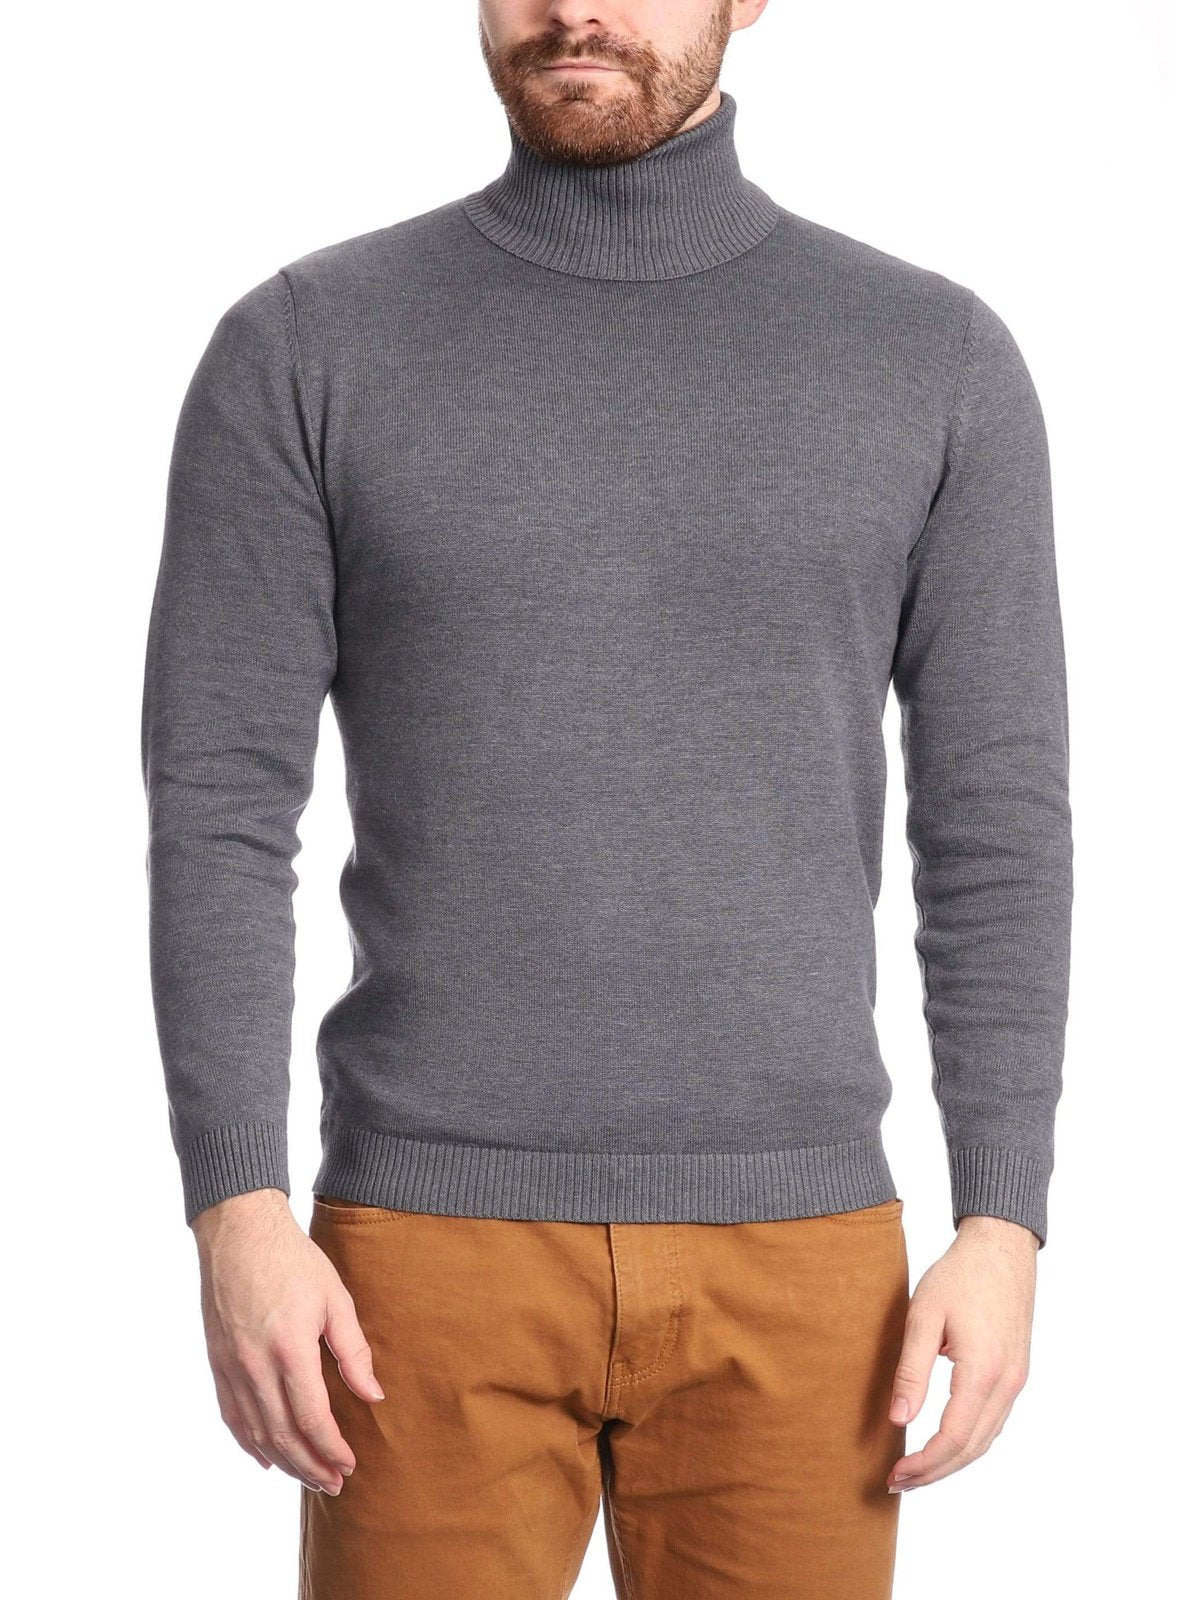 Arthur Black Default Category Migrated Gray / XL Arthur Black Men&#39;s Solid Gray Pullover Cotton Blend Turtleneck Sweater Shirt